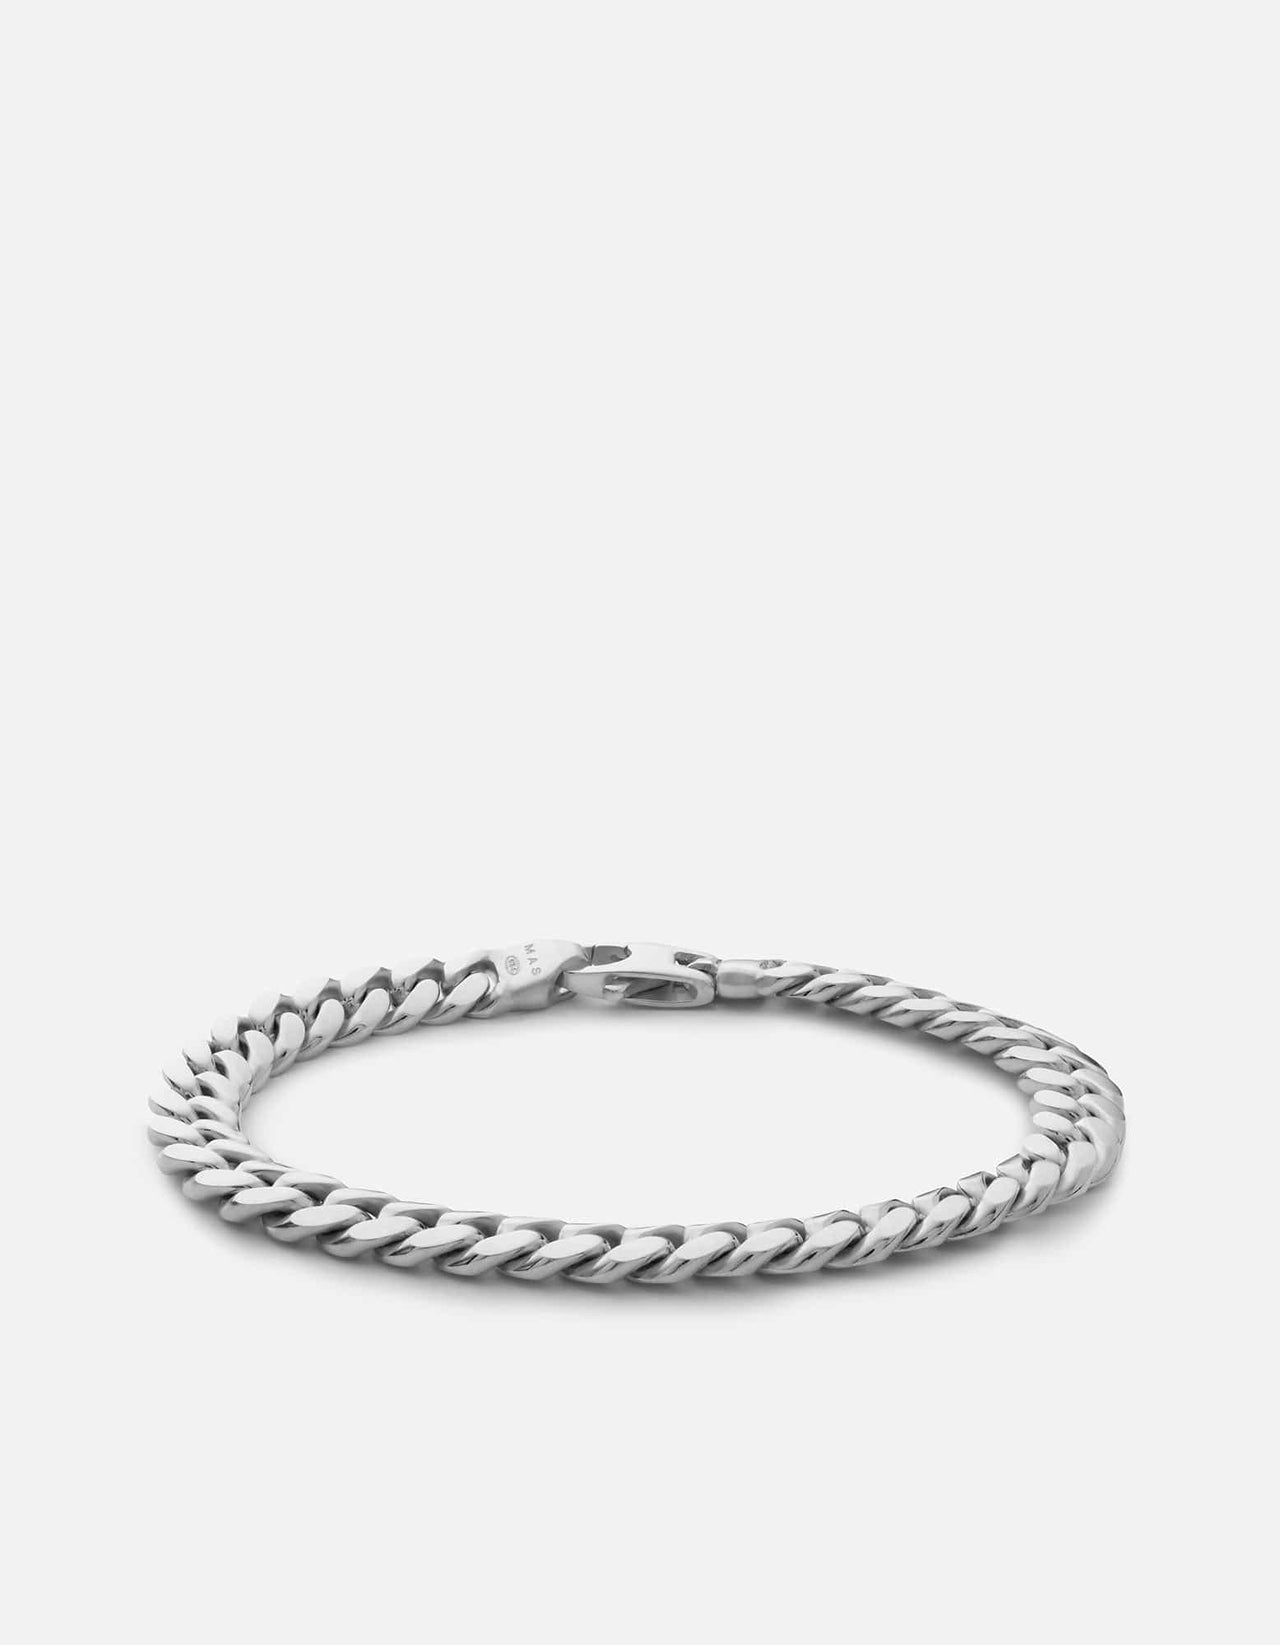 Men's Sterling Silver Chain Bracelet from Bali - Magic Conjurer | NOVICA